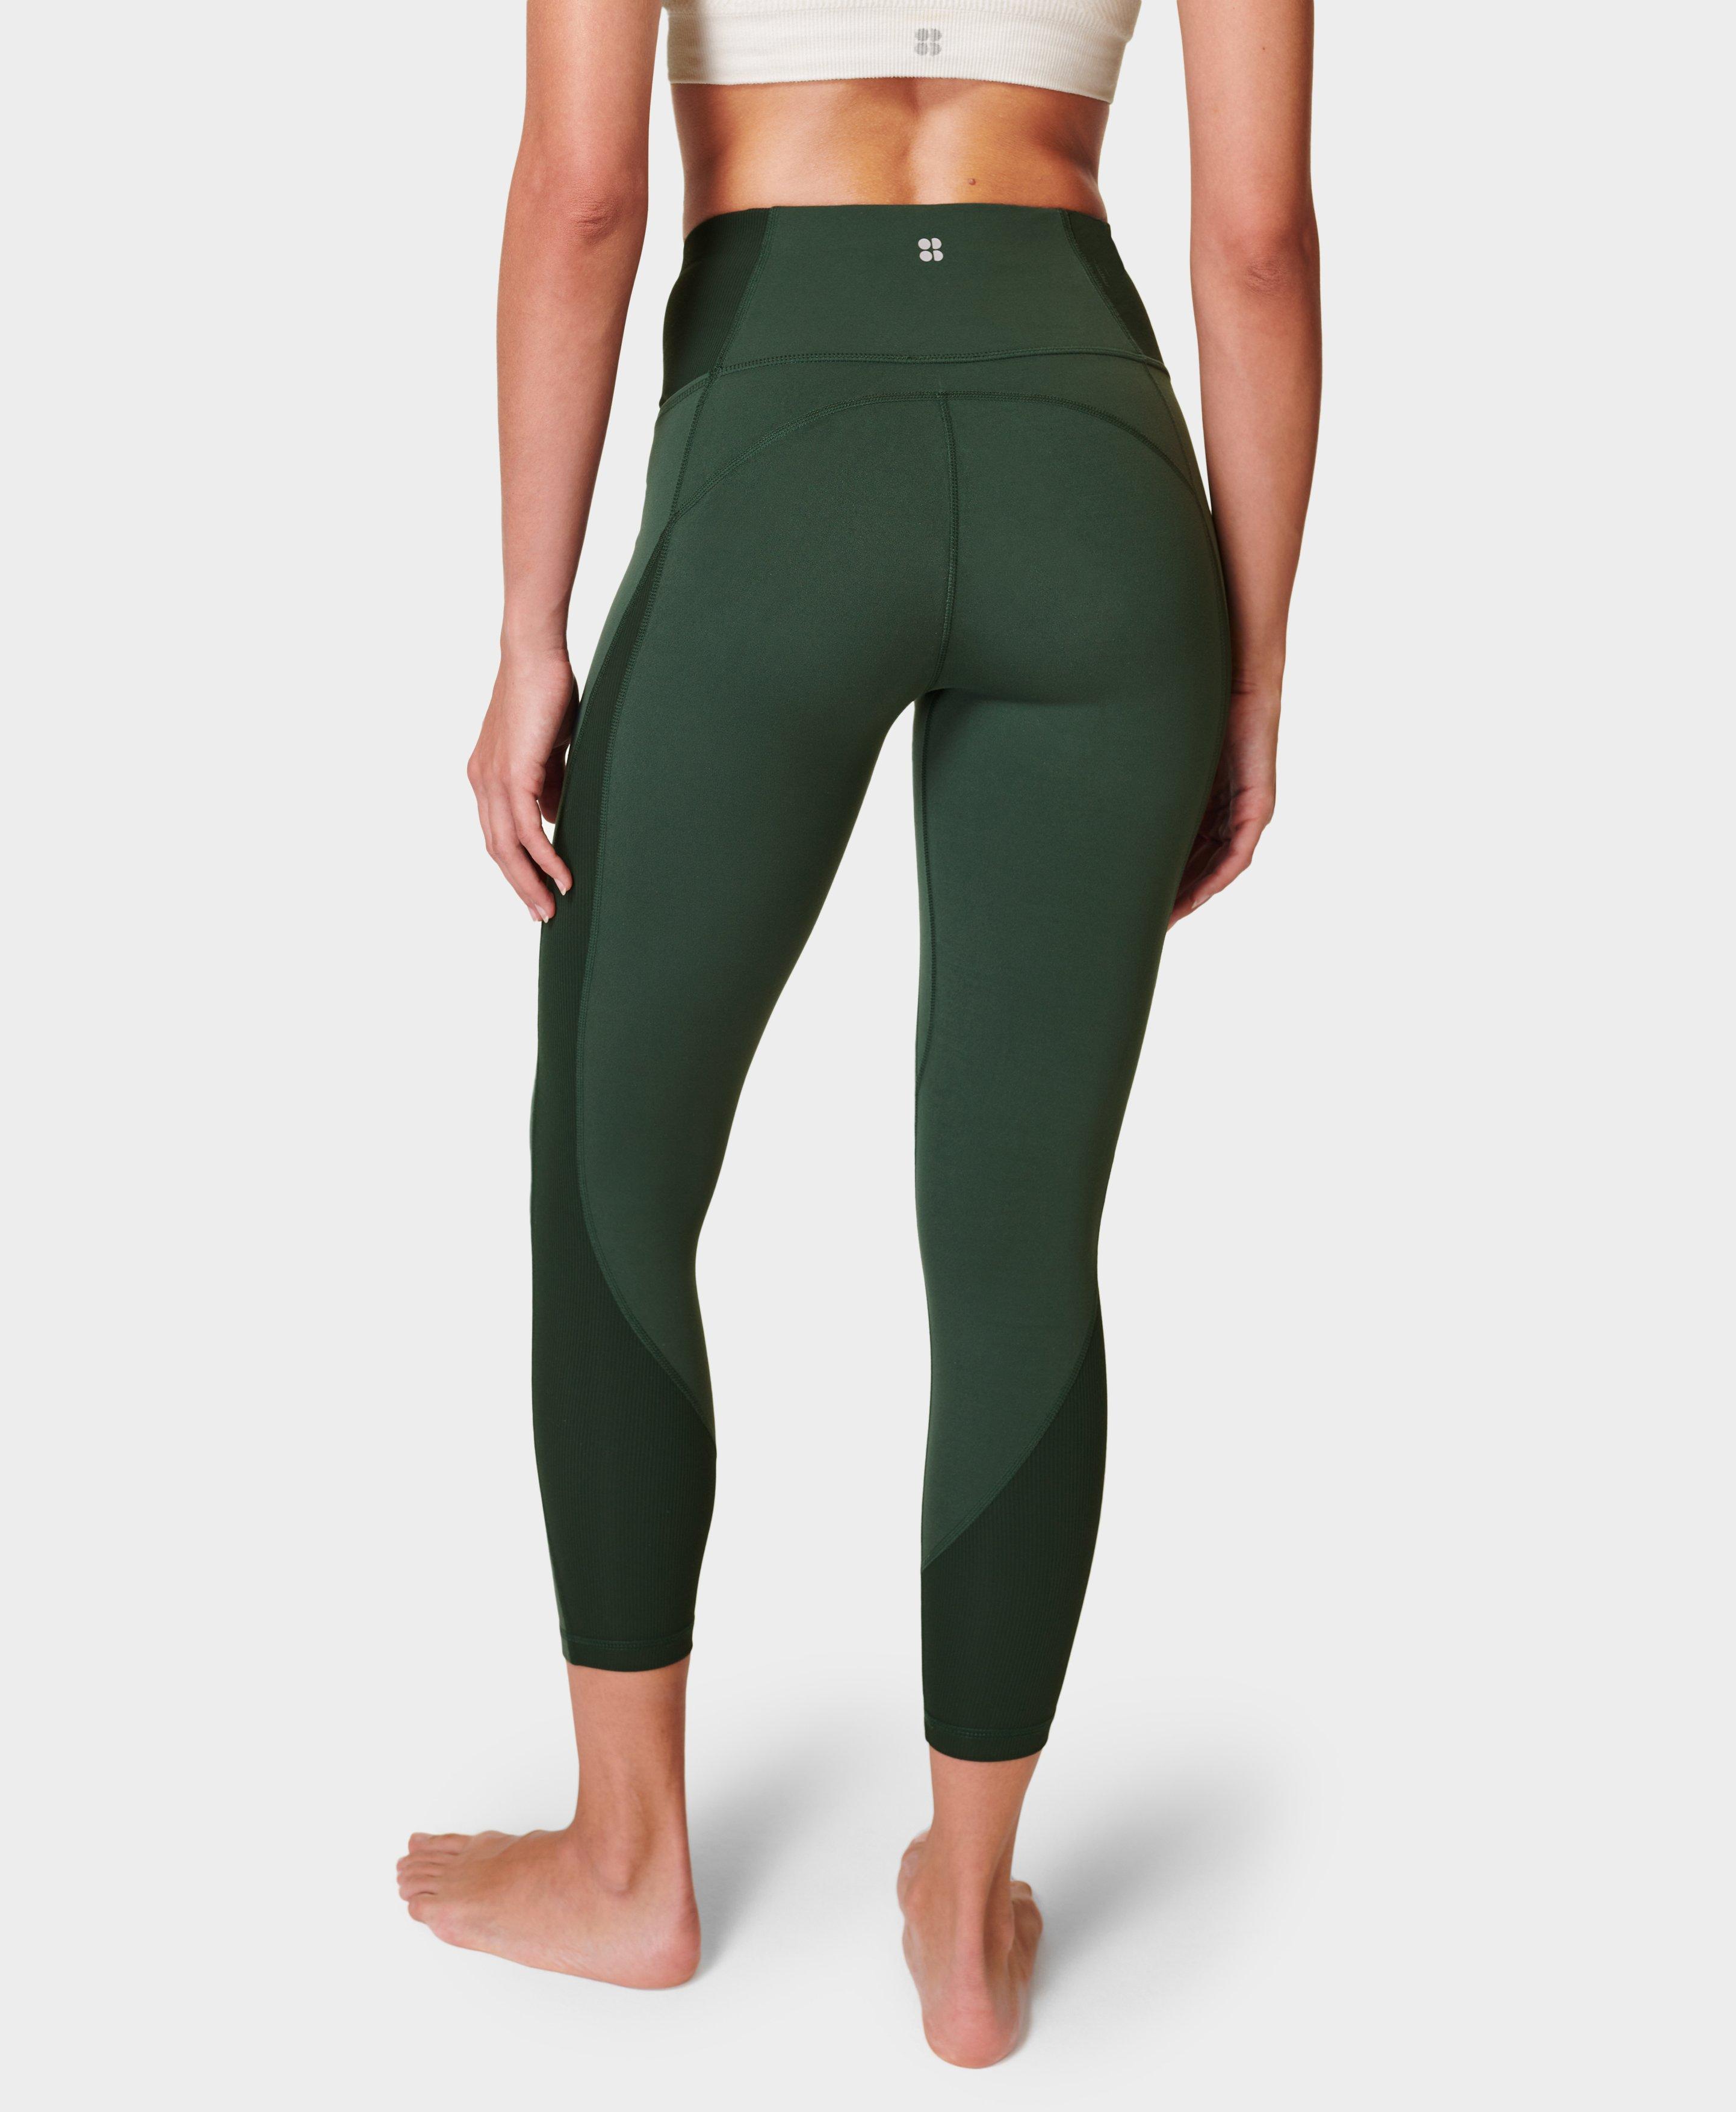 Women's Yoga Pants - Tight Leggings / Green and Black